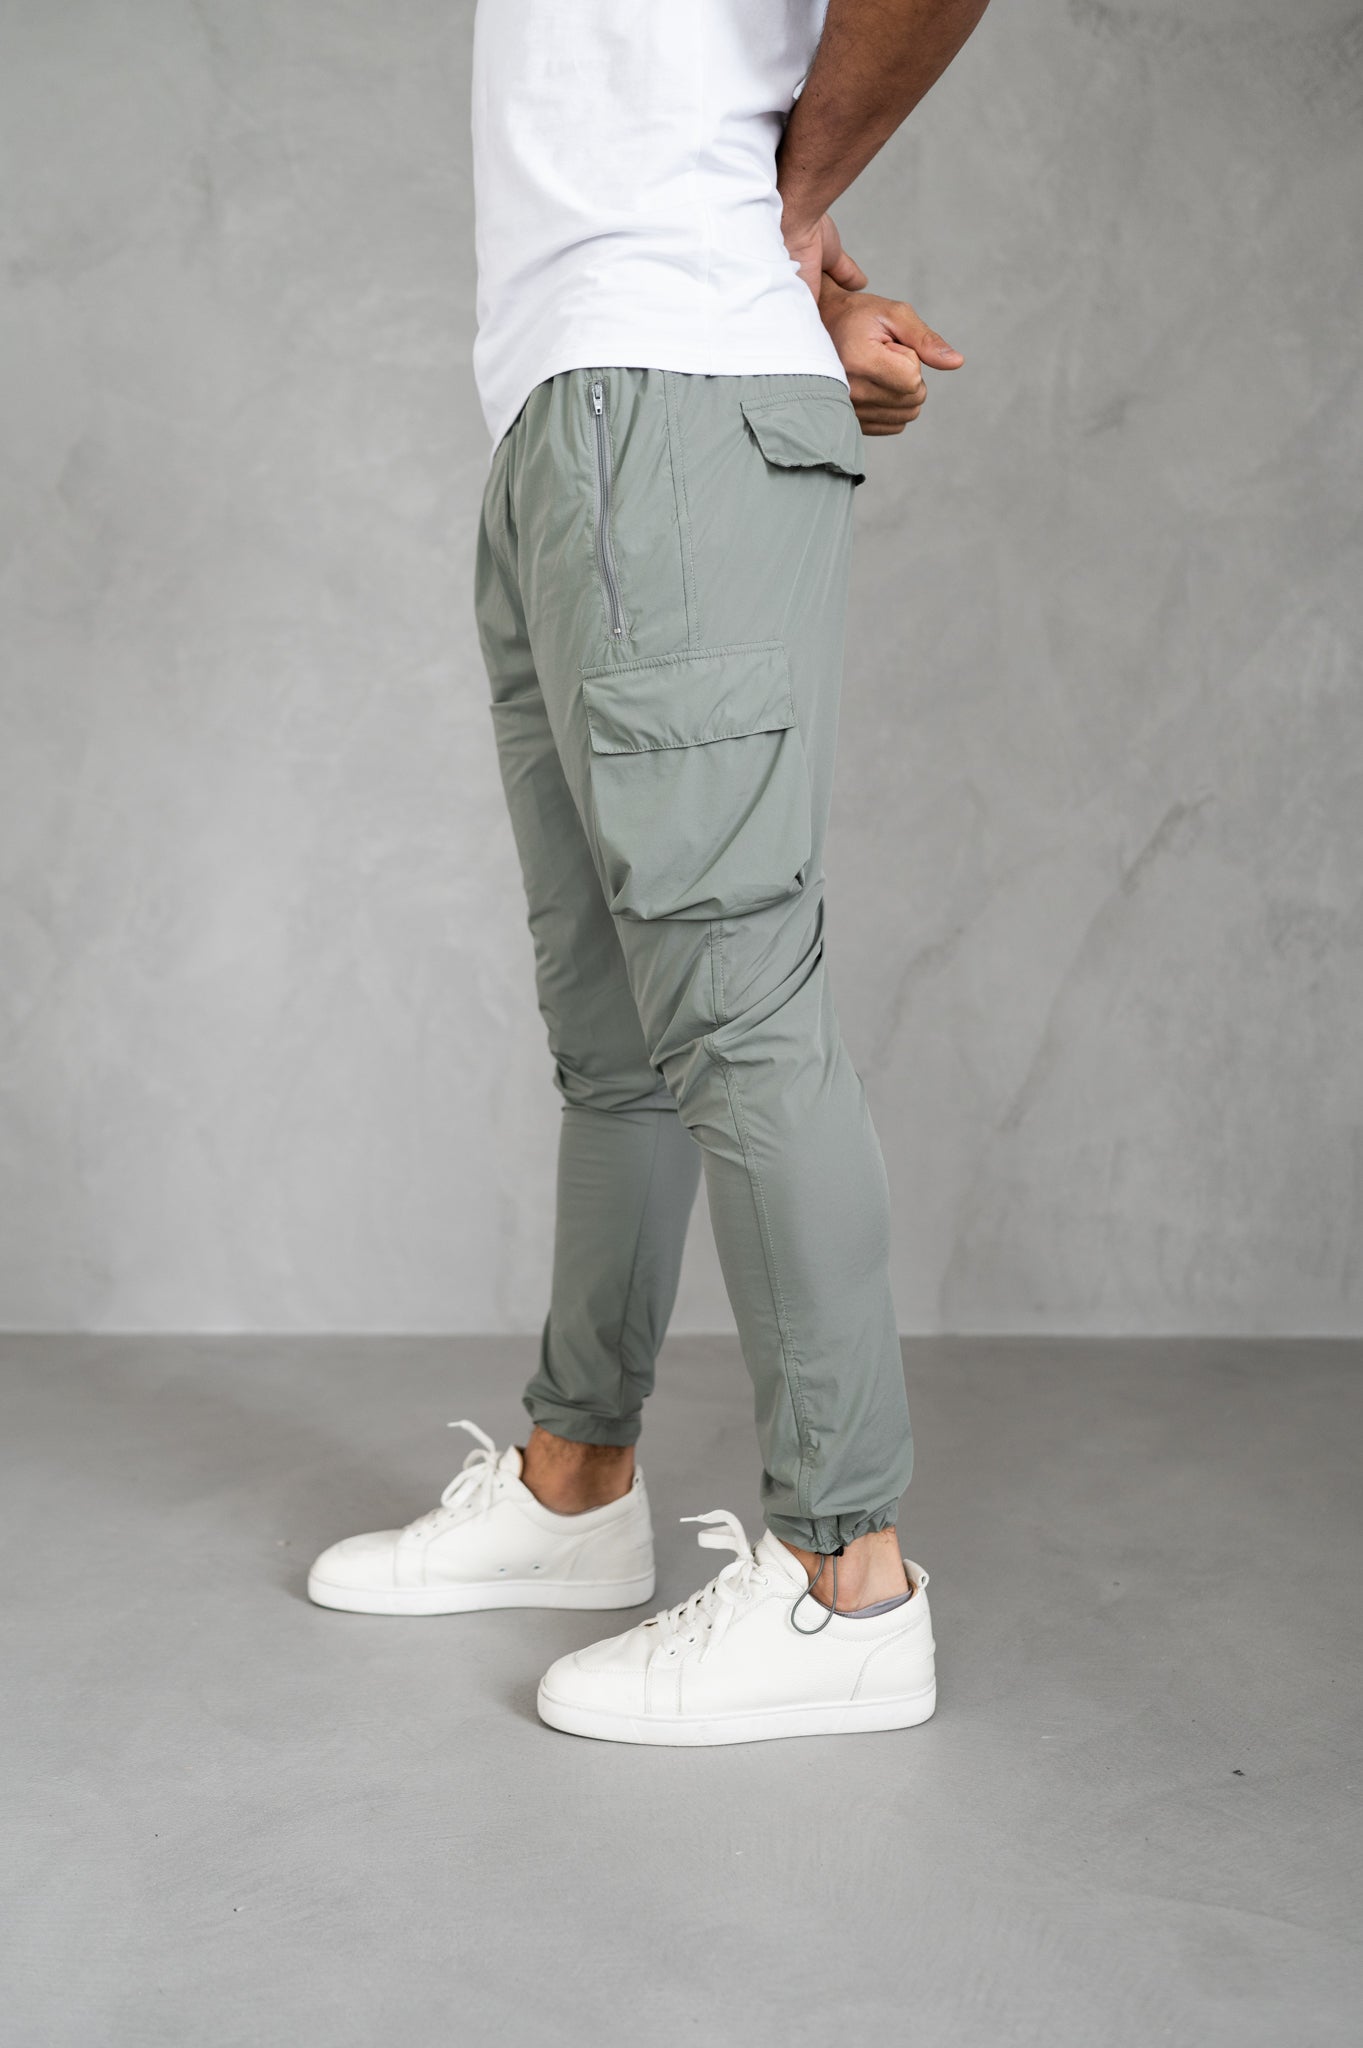 True Army fatigue Woodland Camo fringe Pants | Fringe pants, Cute outfits  with jeans, Army fatigue